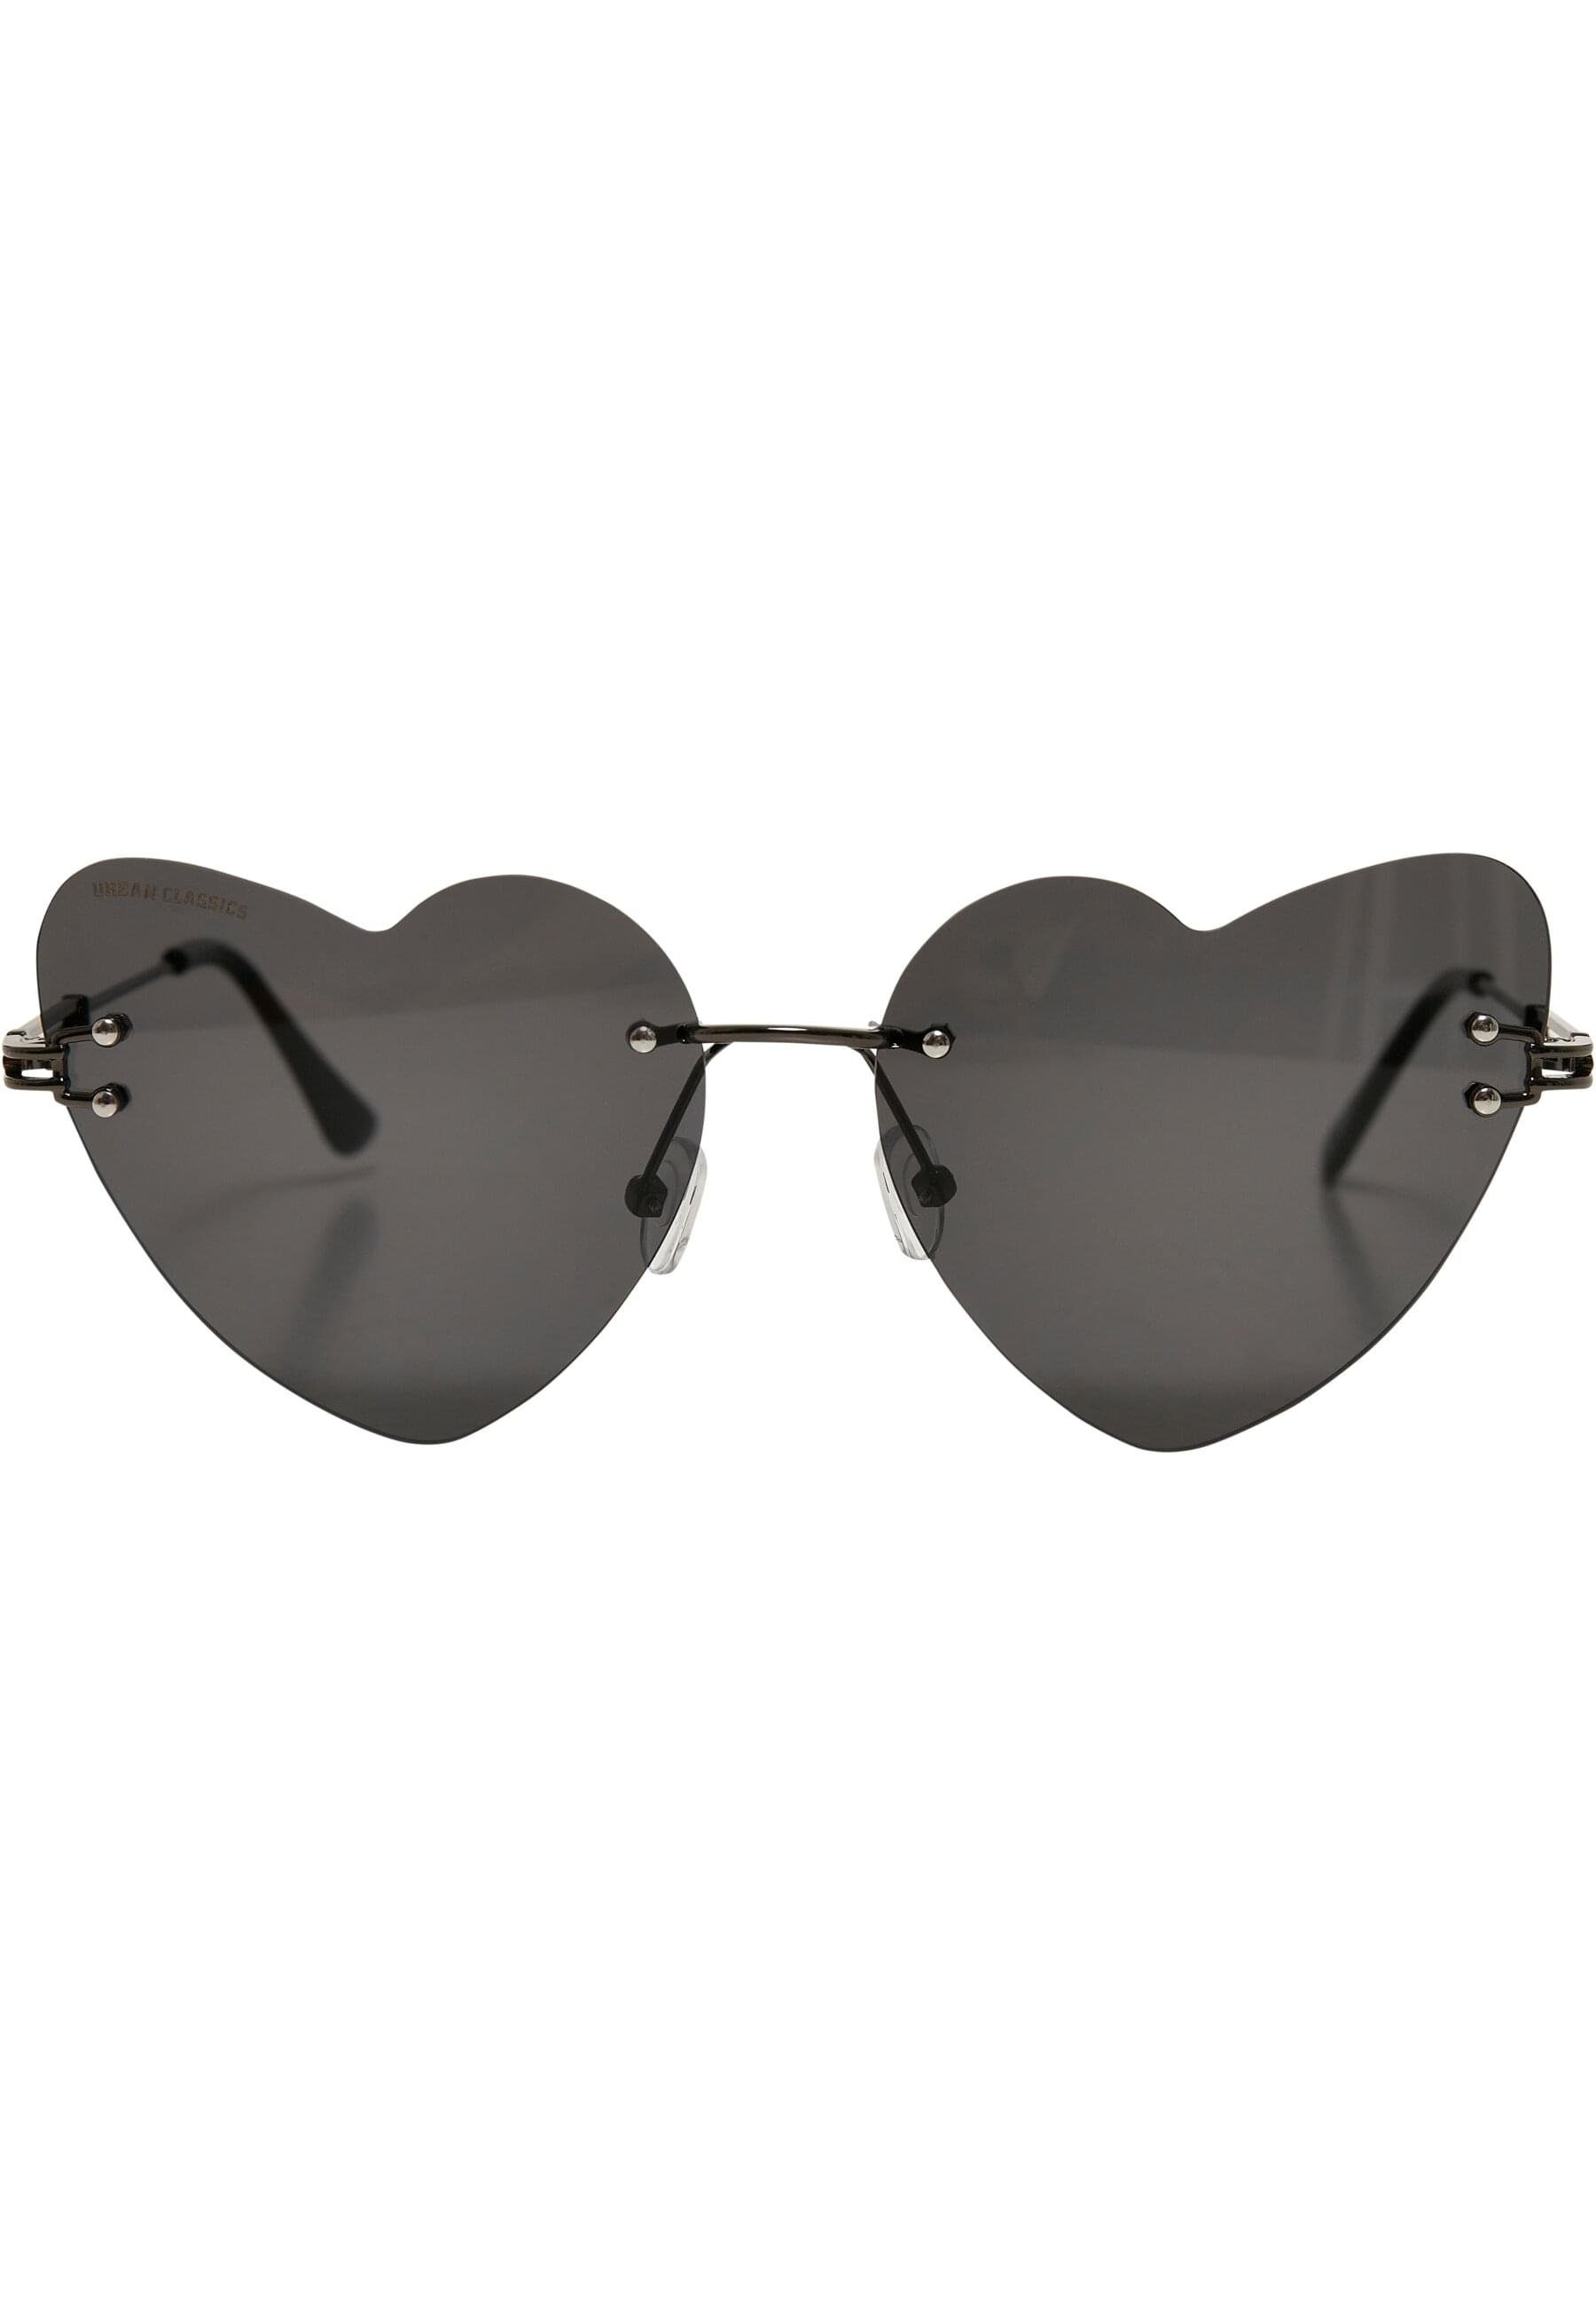 URBAN CLASSICS Sonnenbrille Unisex Sunglasses Heart With Chain black/black